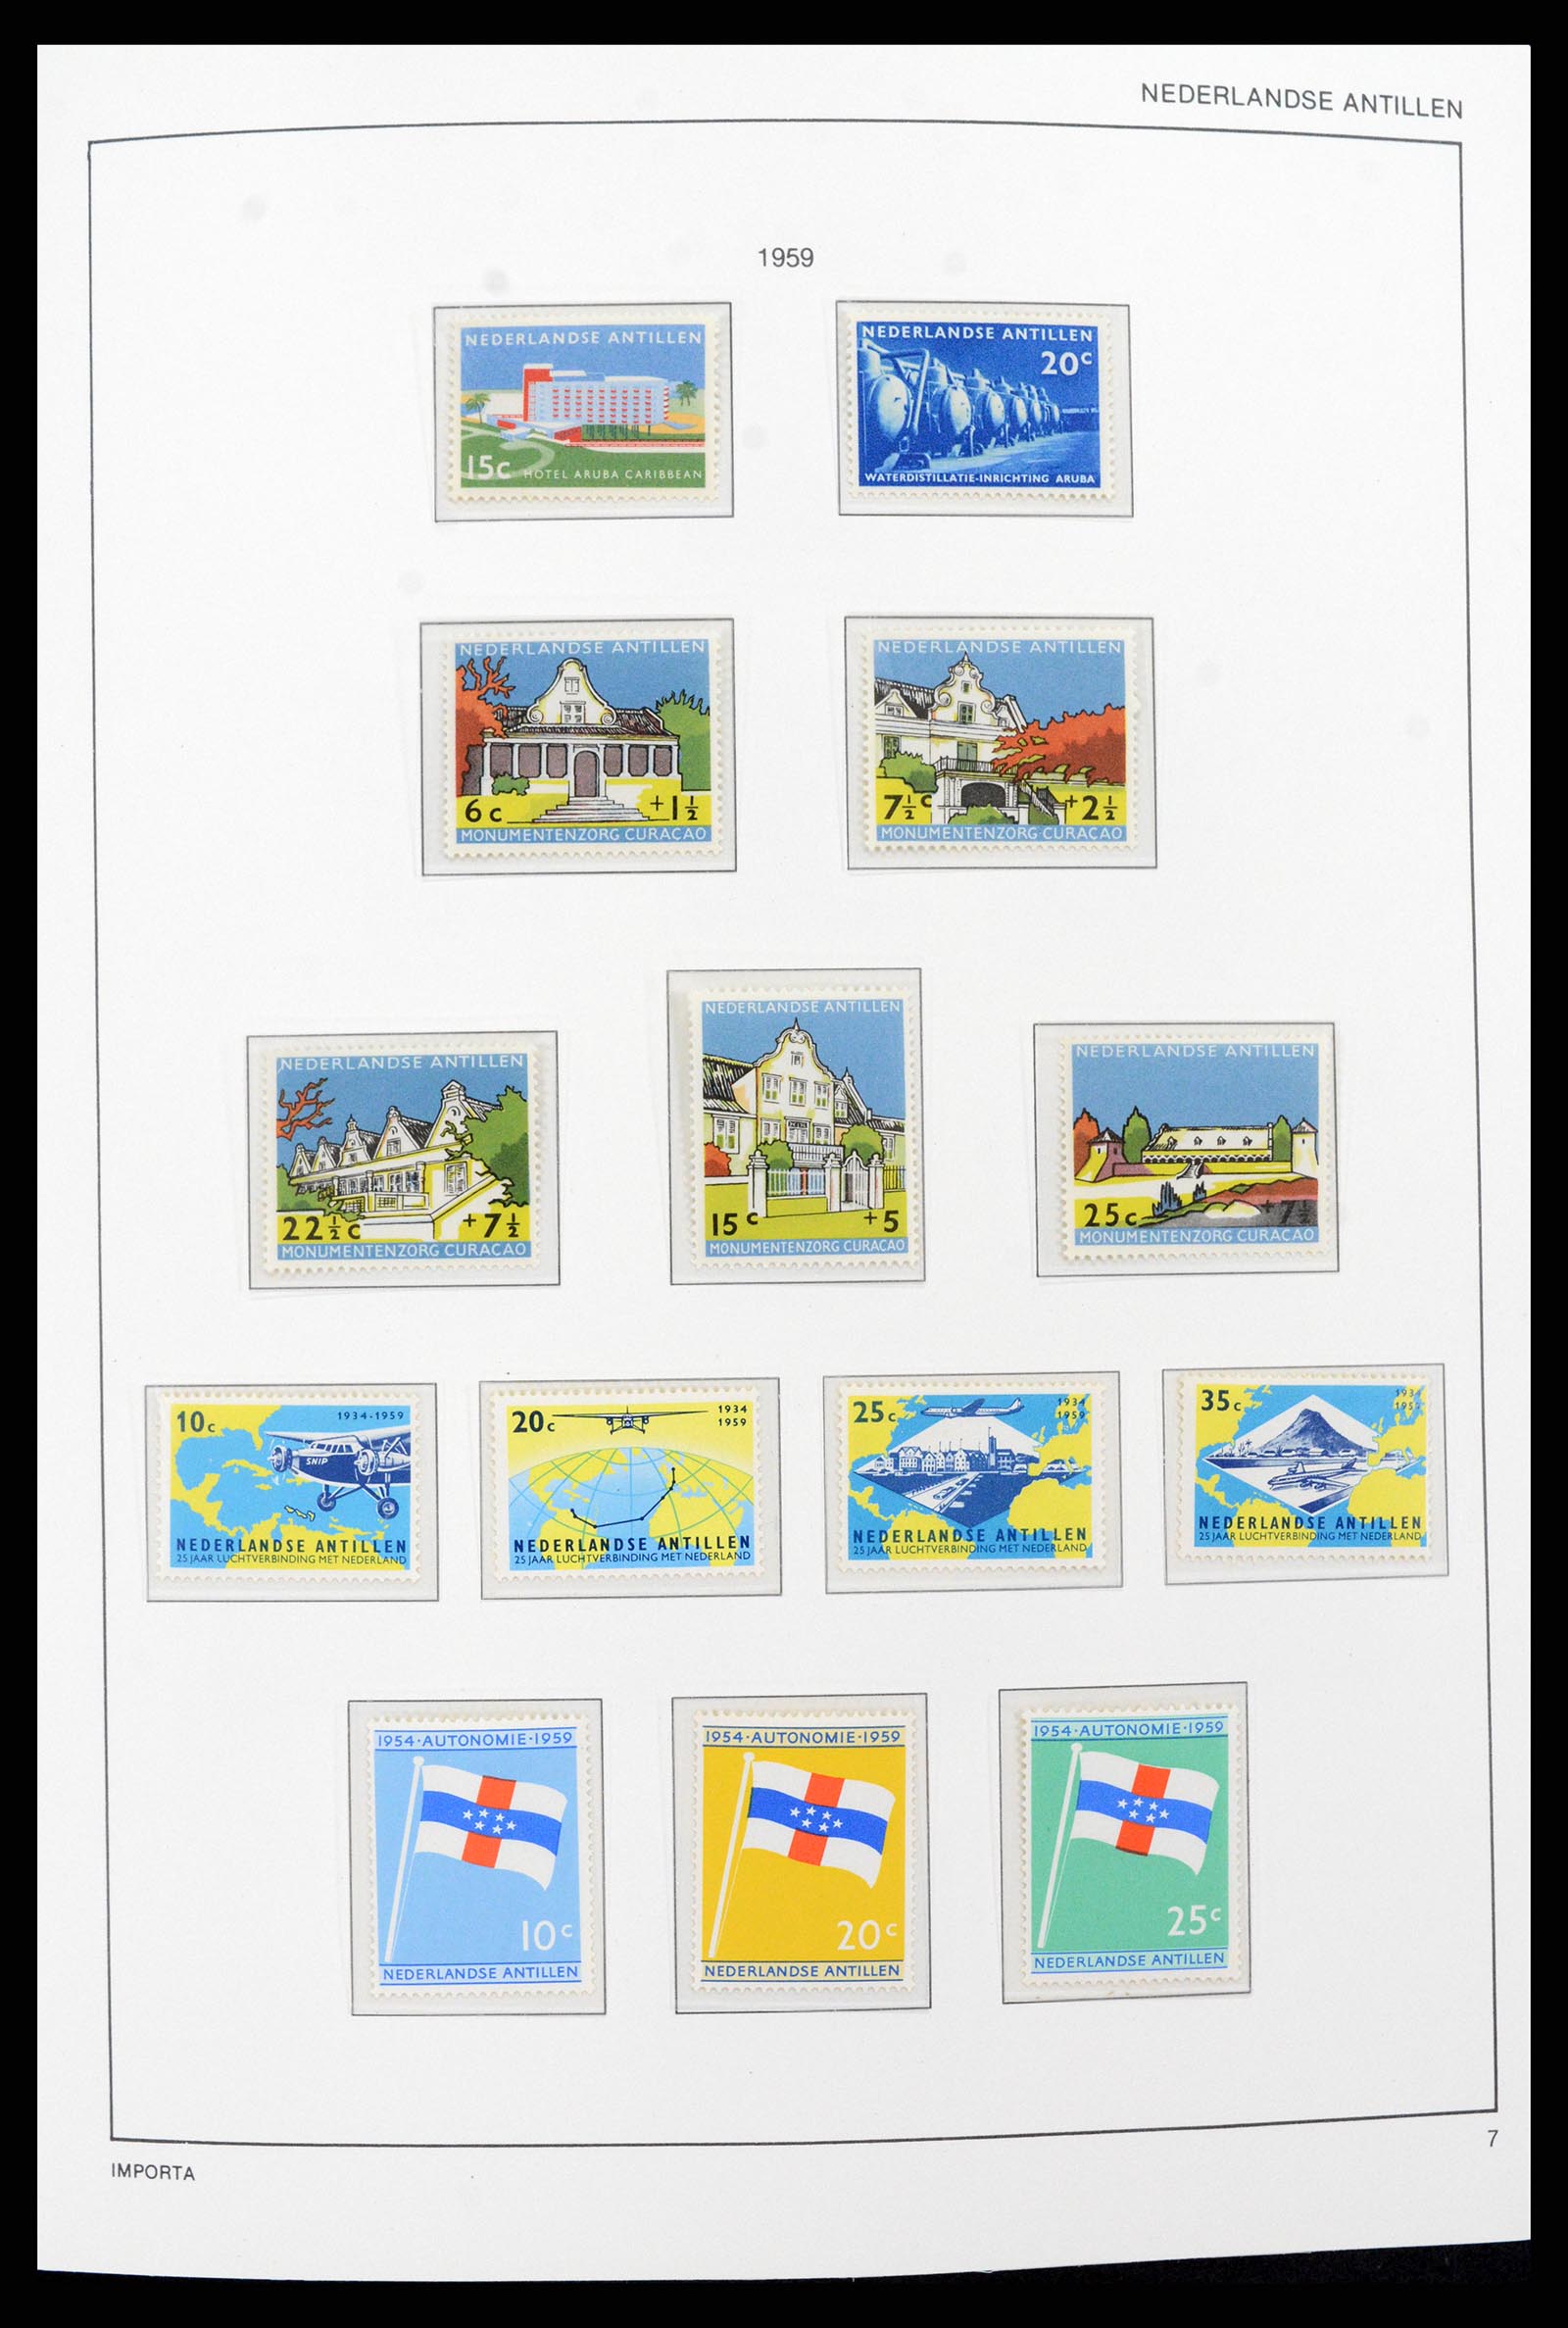 37693 007 - Stamp collection 37693 Netherlands Antilles 1949-2001.